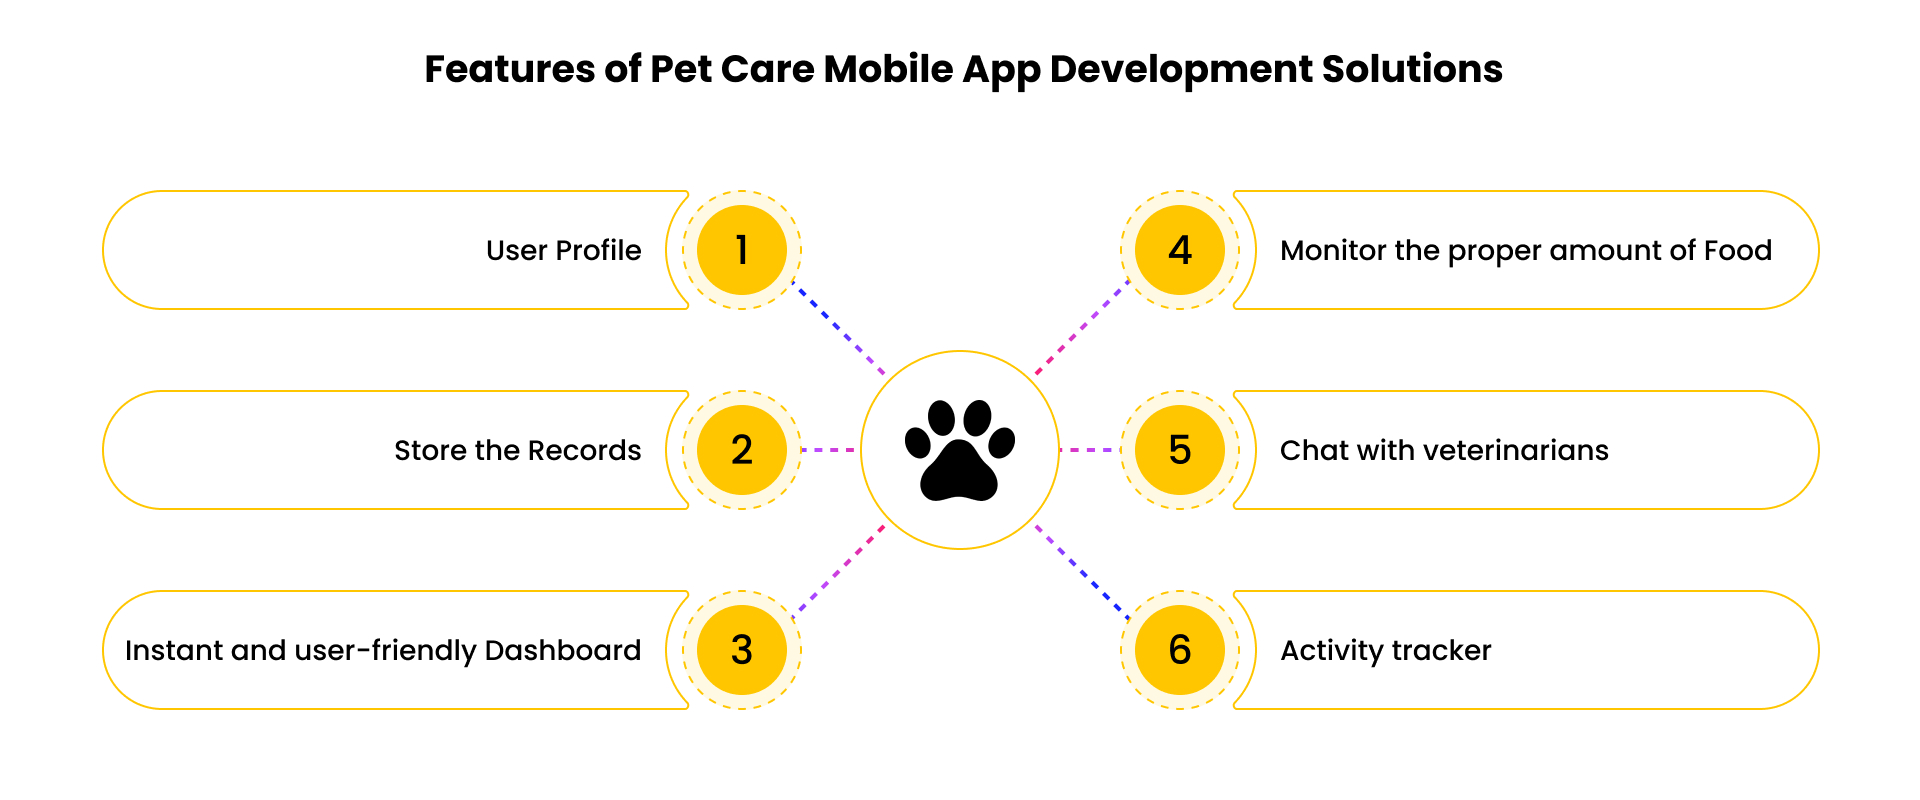 Feature of pet care mobile app development